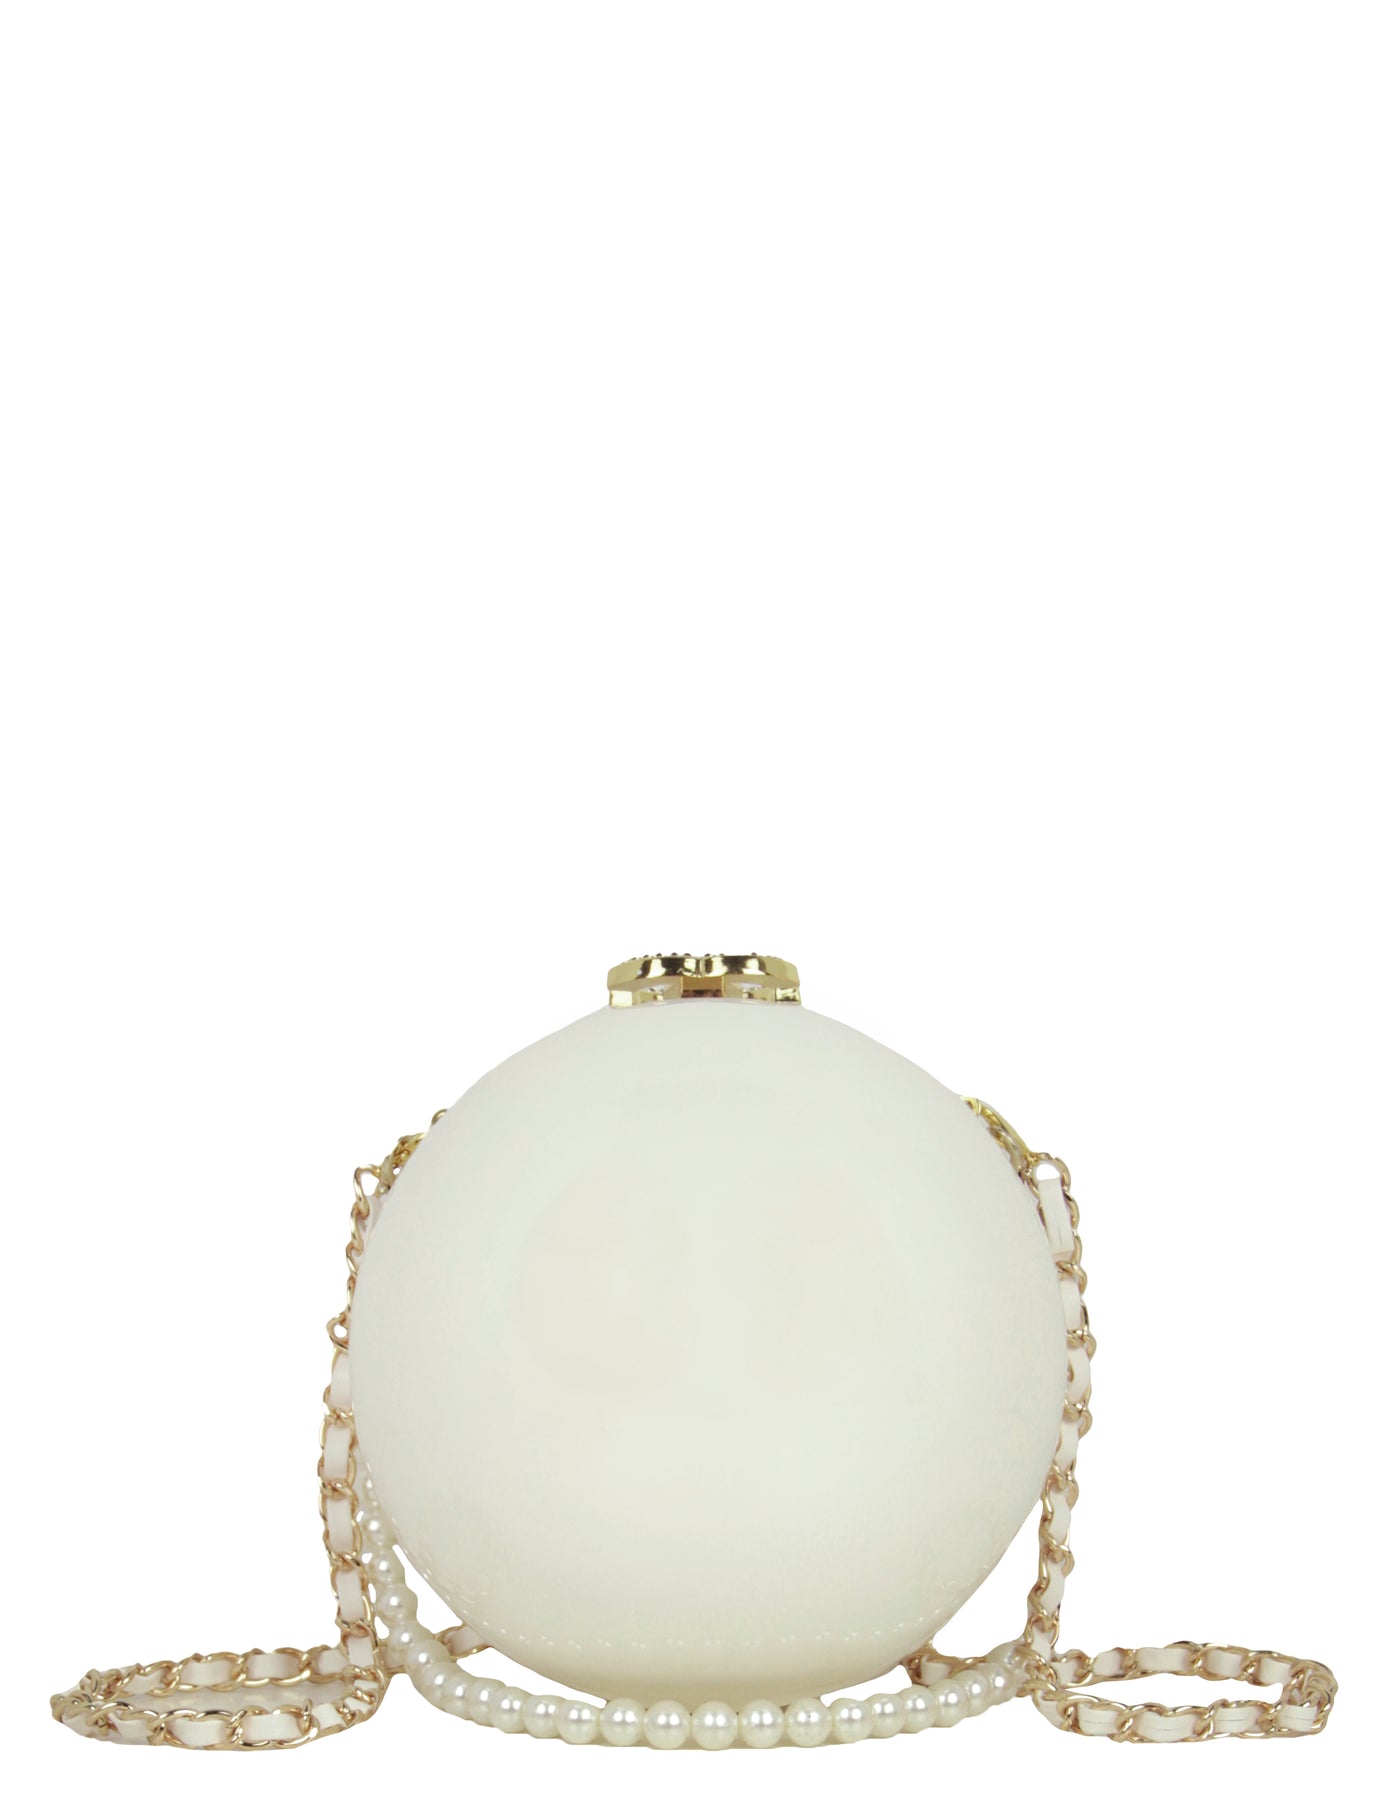 Chanel vip gift pearl ball clutch bag